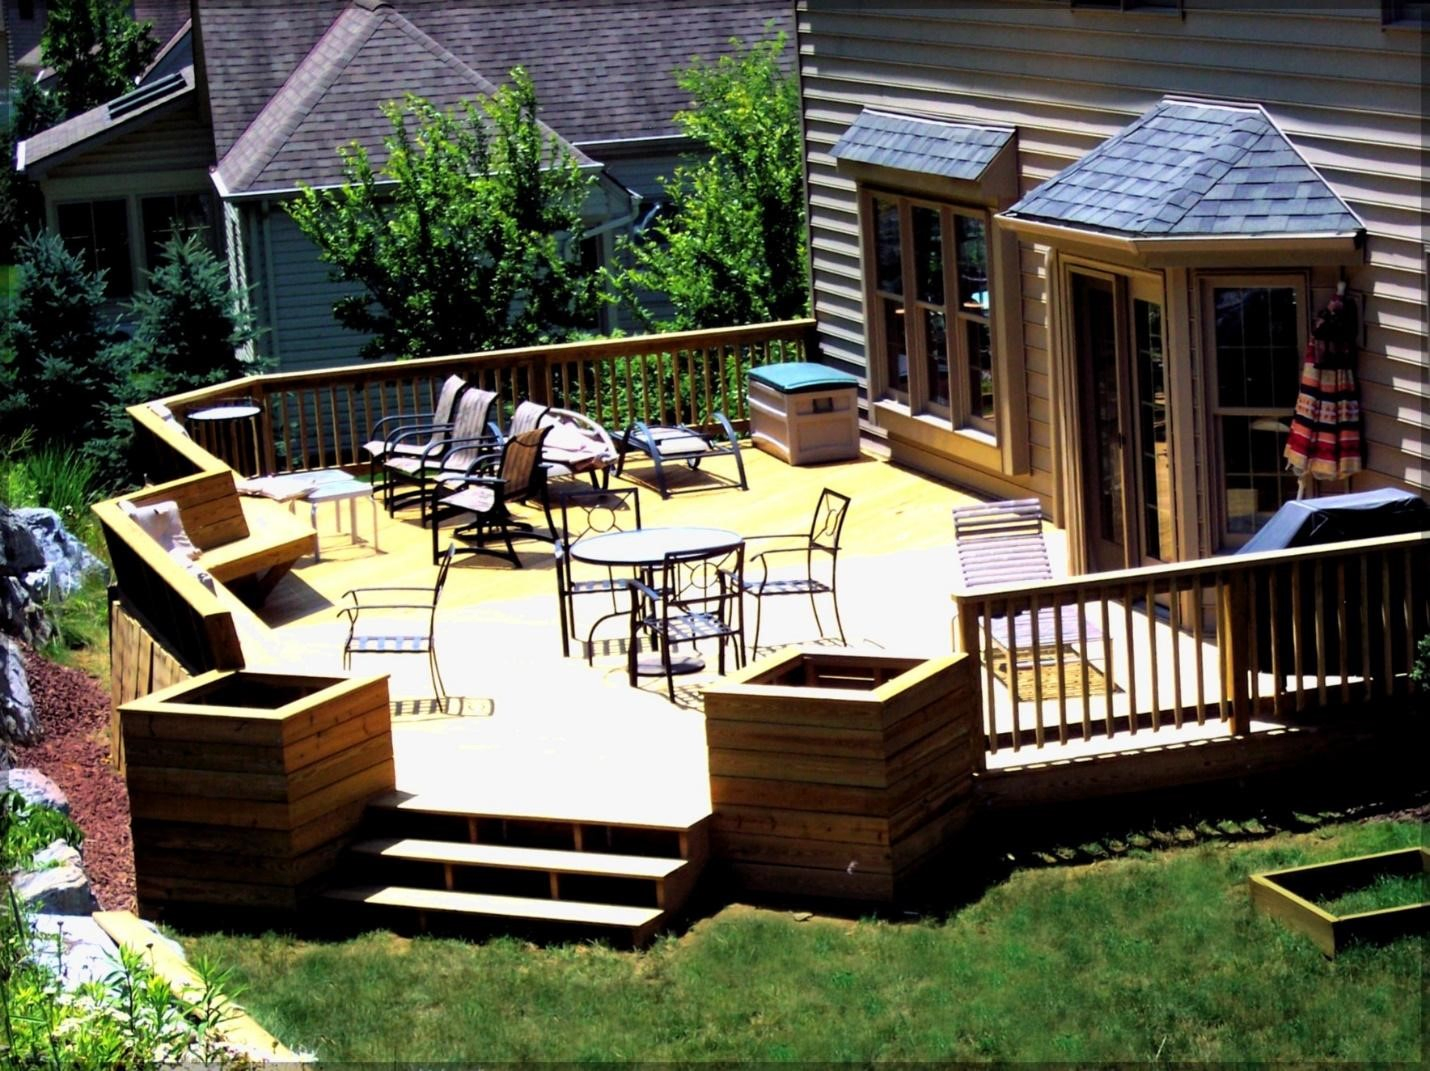 3.SIMPHOME.COM Backyard Patio with Wooden Deck